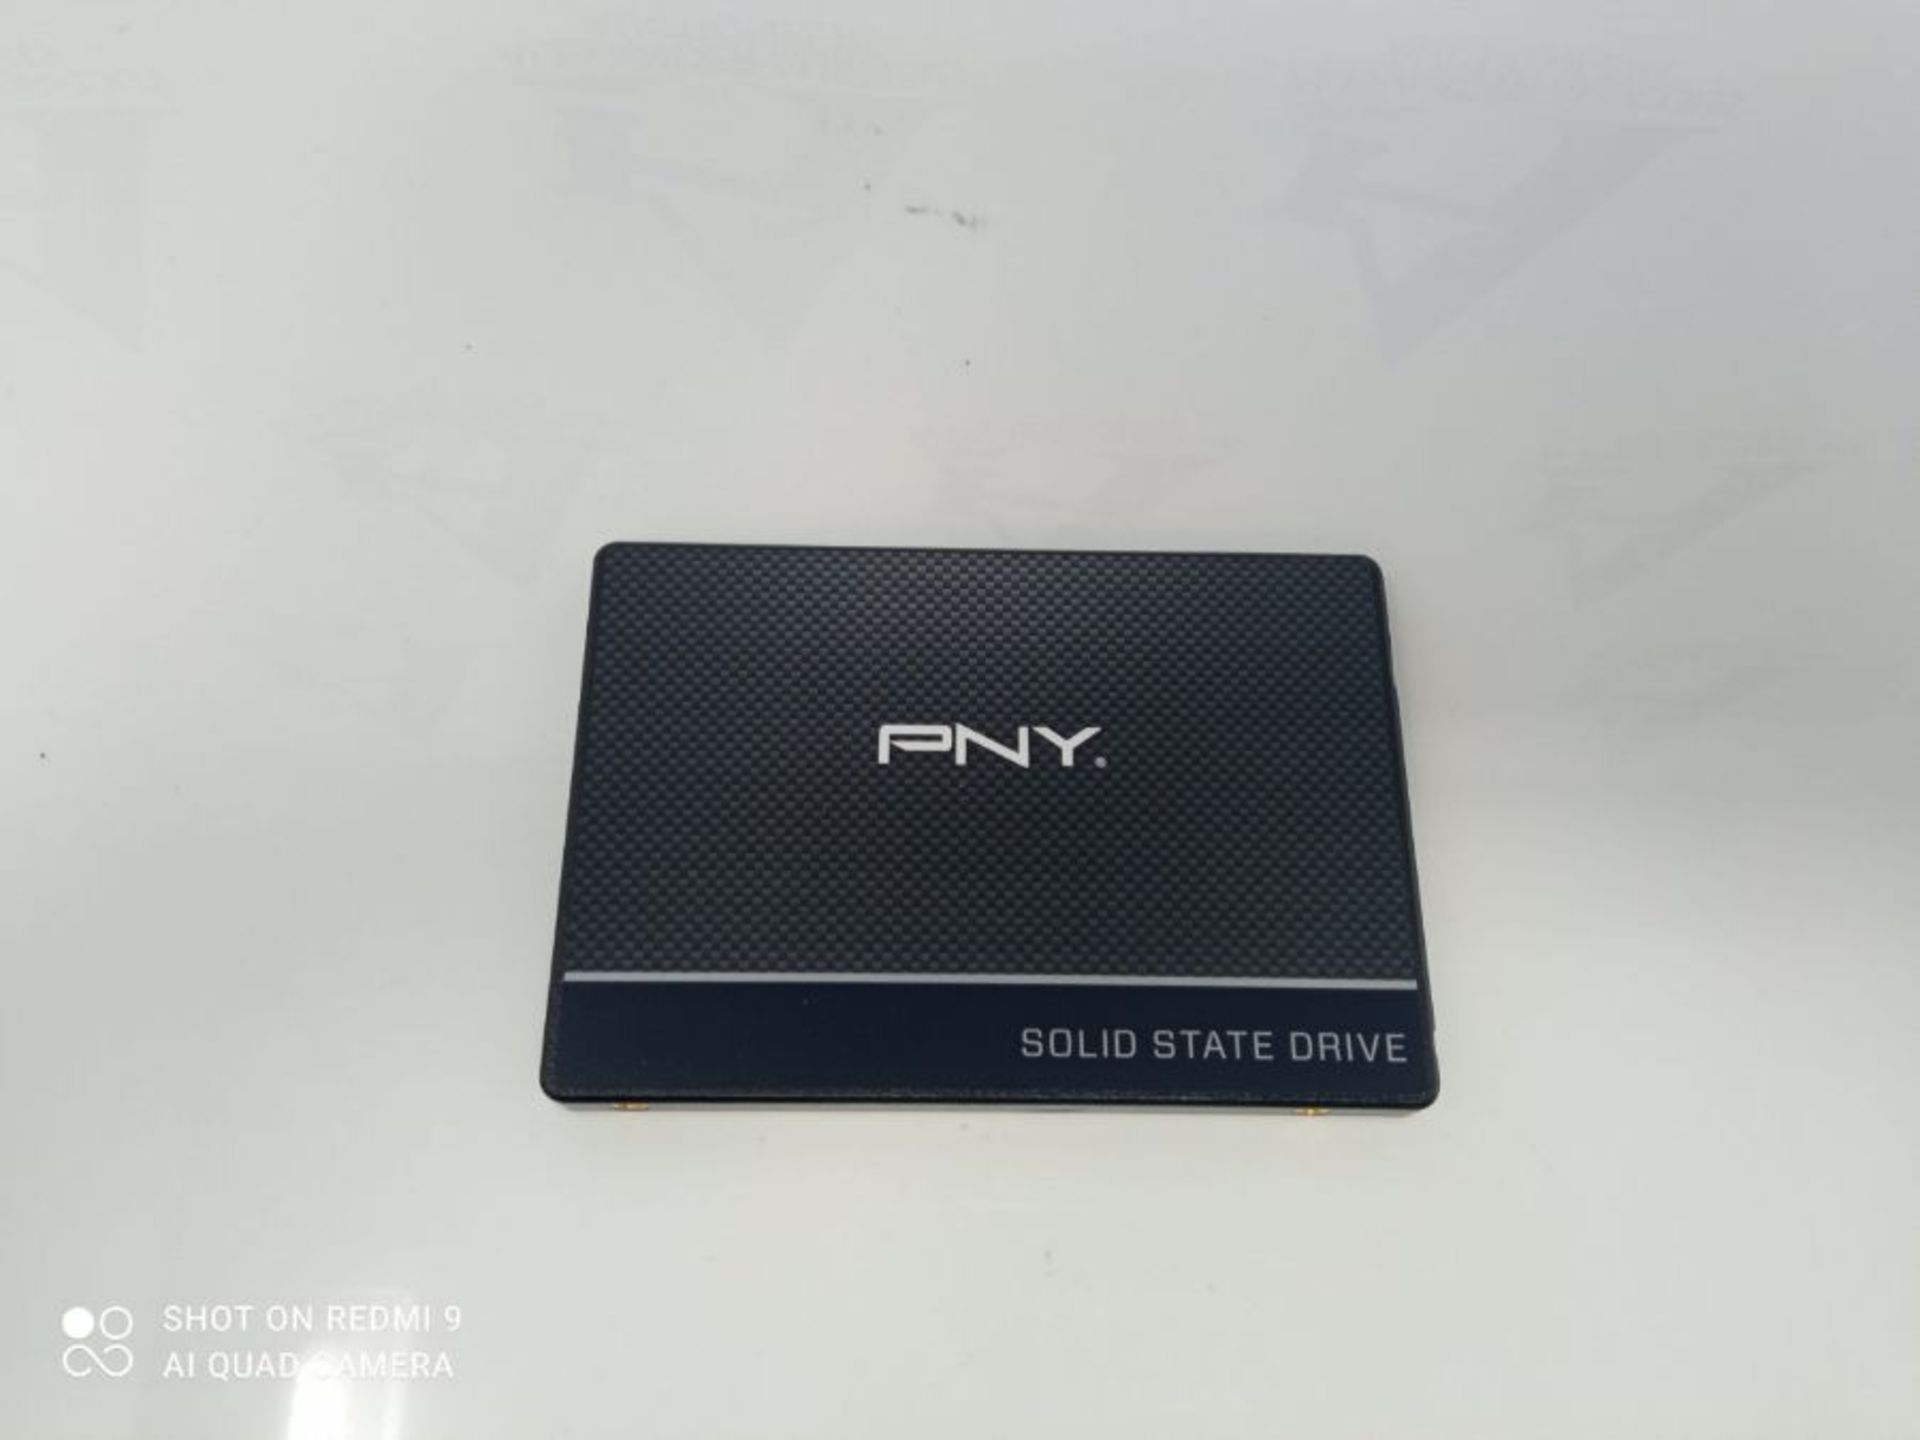 PNY CS900 Series 2.5" SATA III 6Gb/s - 120GB SSD - internal solid state drive - Image 3 of 3